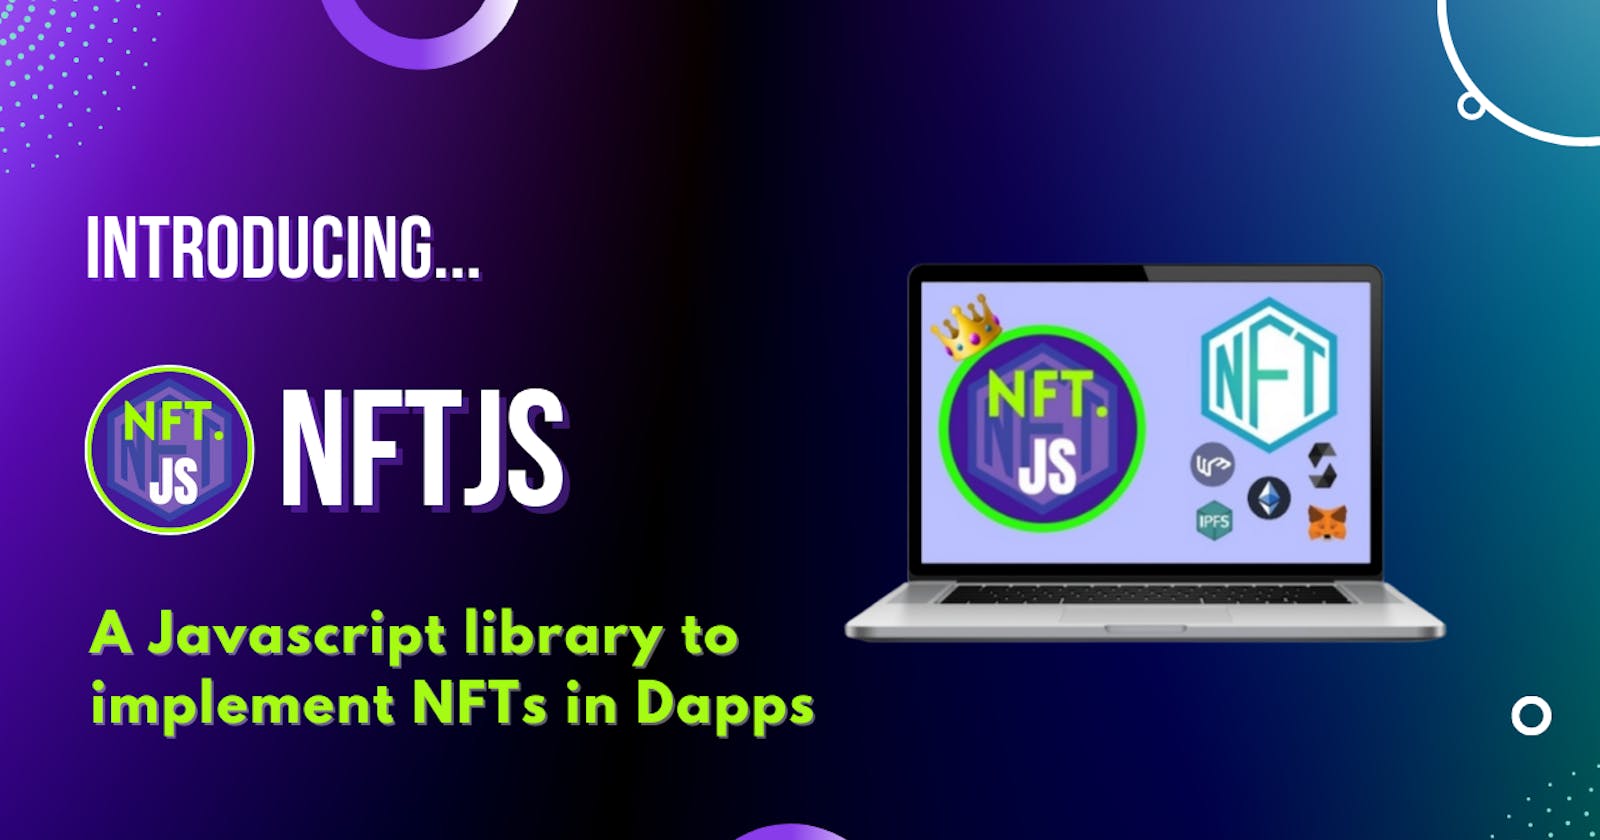 NFT.JS - A Javascript library to implement NFTs